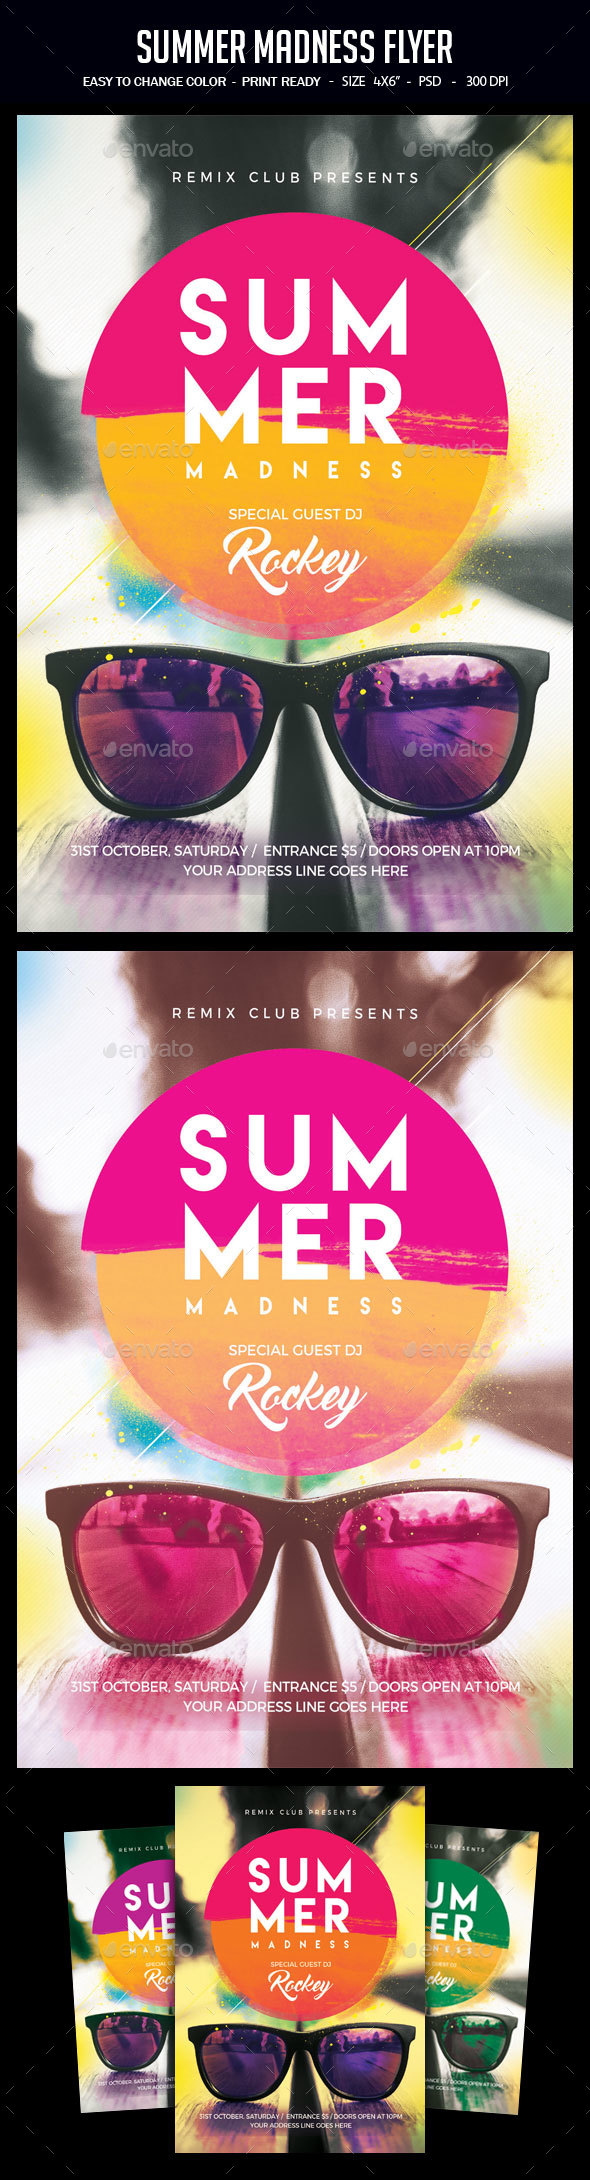 Summer Madness Flyer